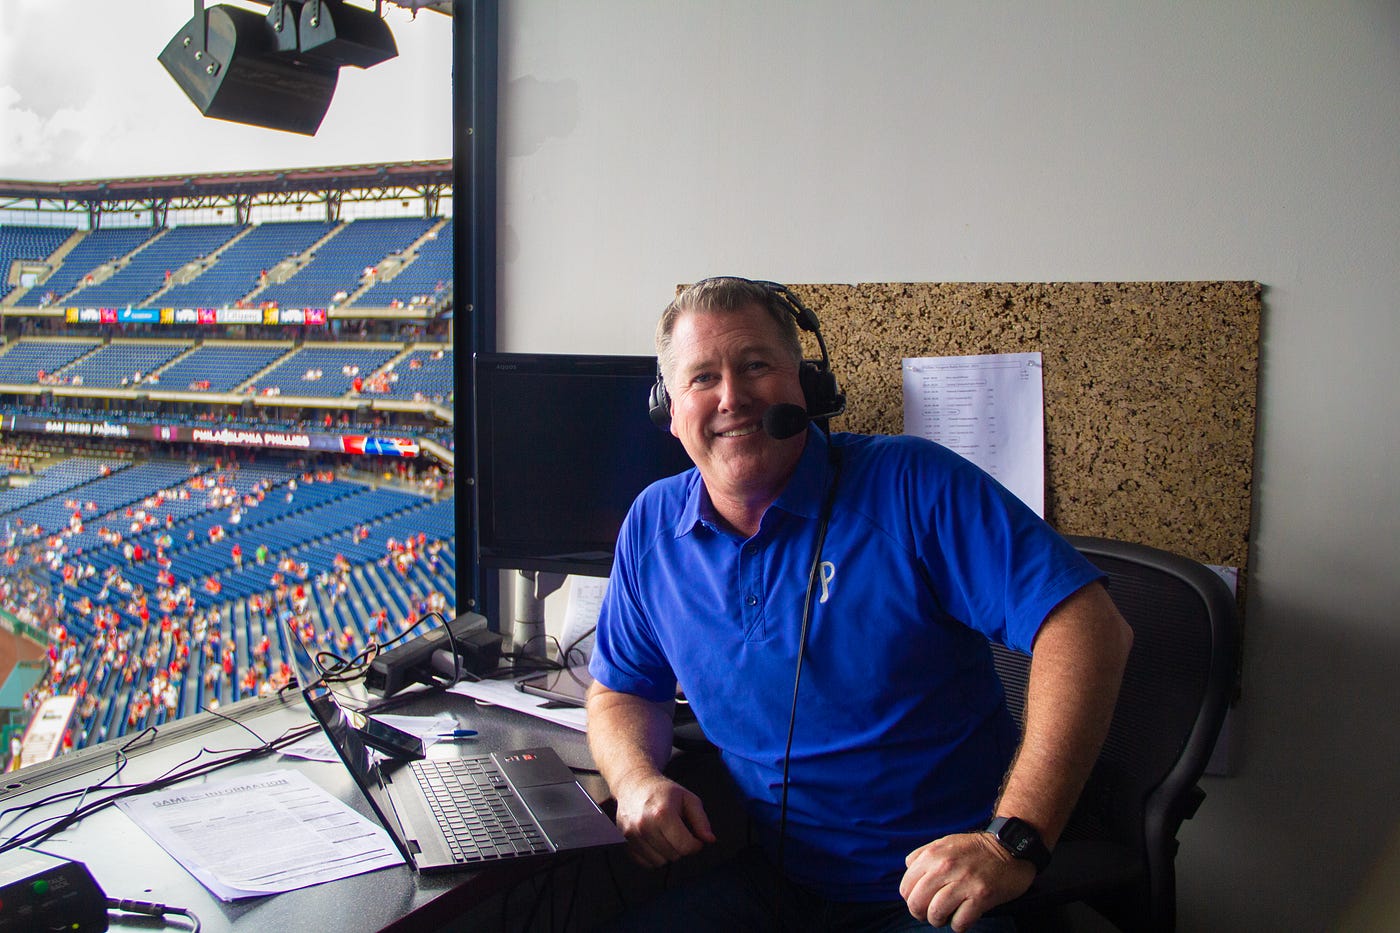 Philadelphia Phillies name four former players to radio broadcast team